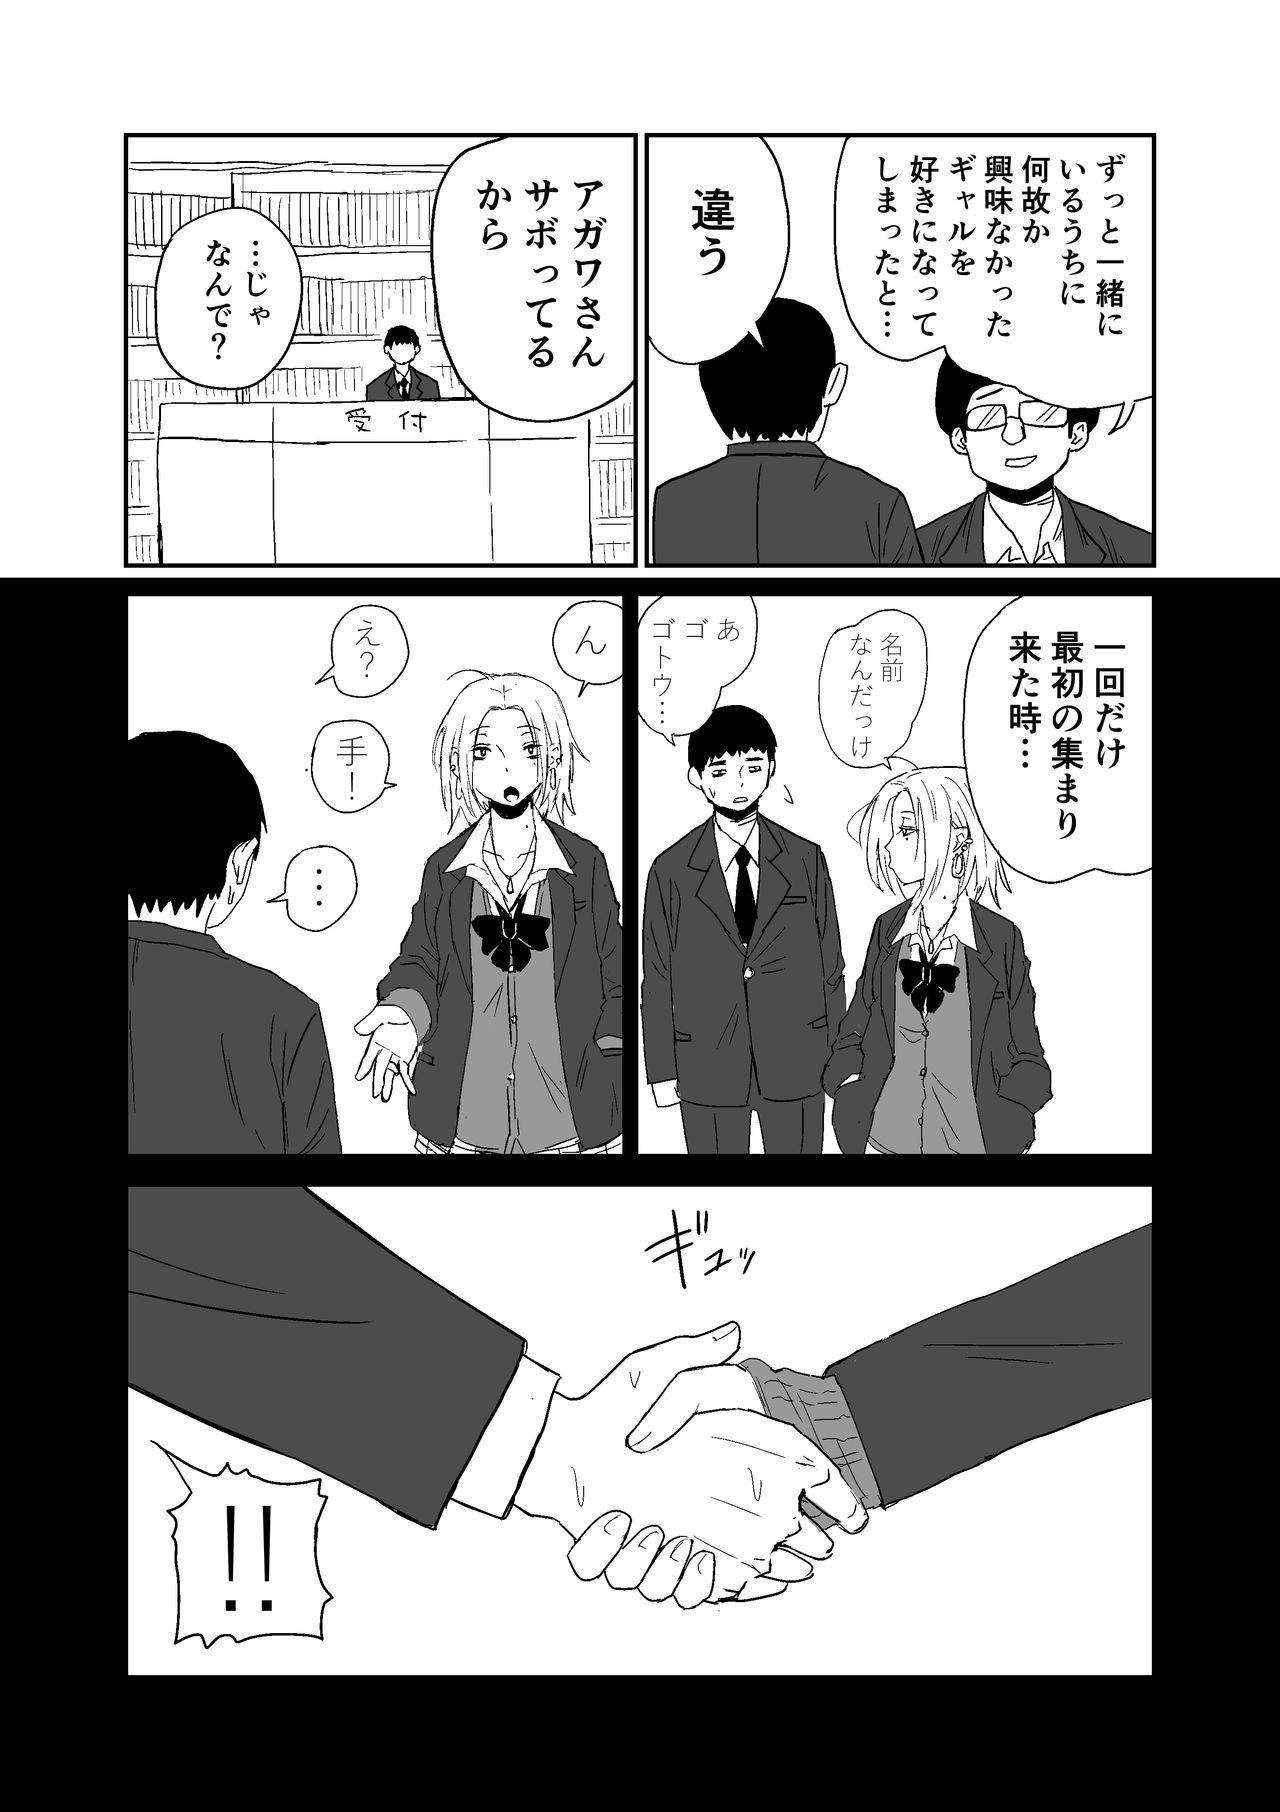 Breeding 女子高生のエロ漫画 - Original Japan - Page 4